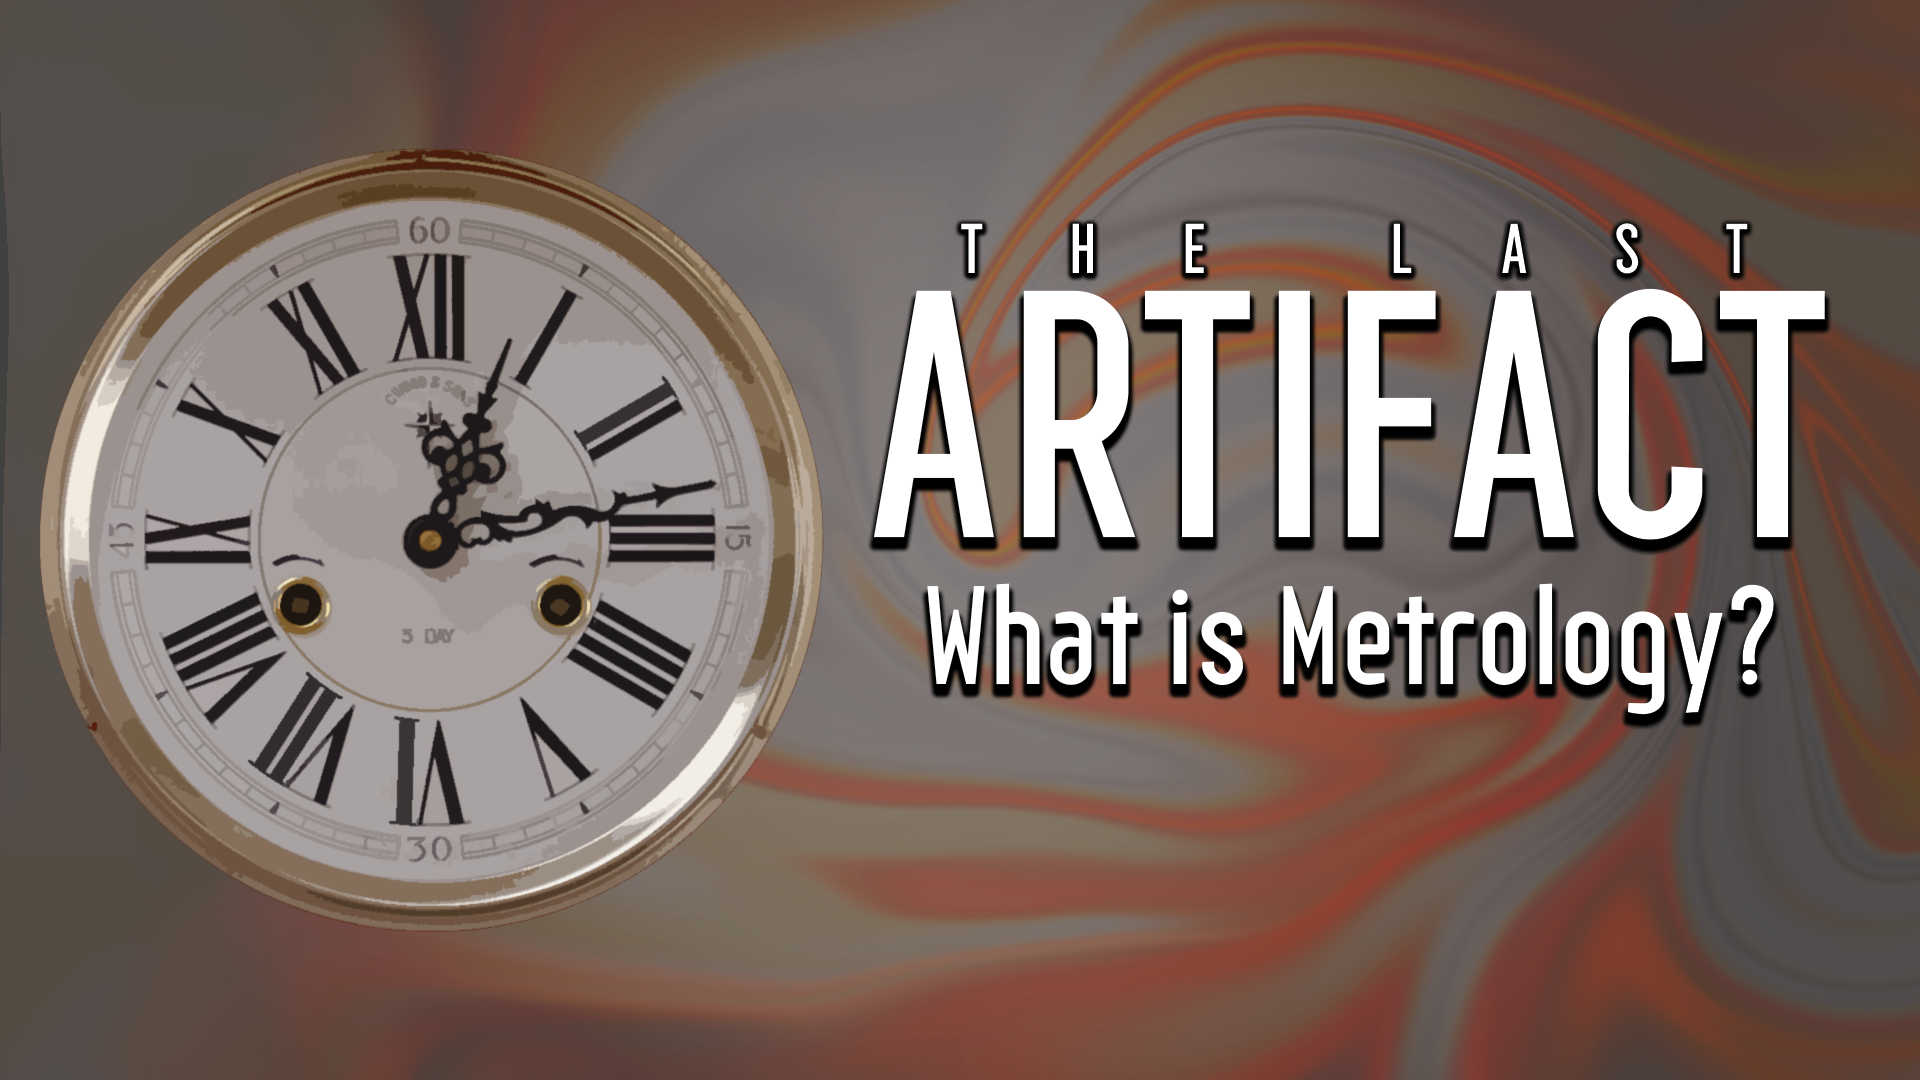 What is Metrology? | The Last Artifact | PBS LearningMedia